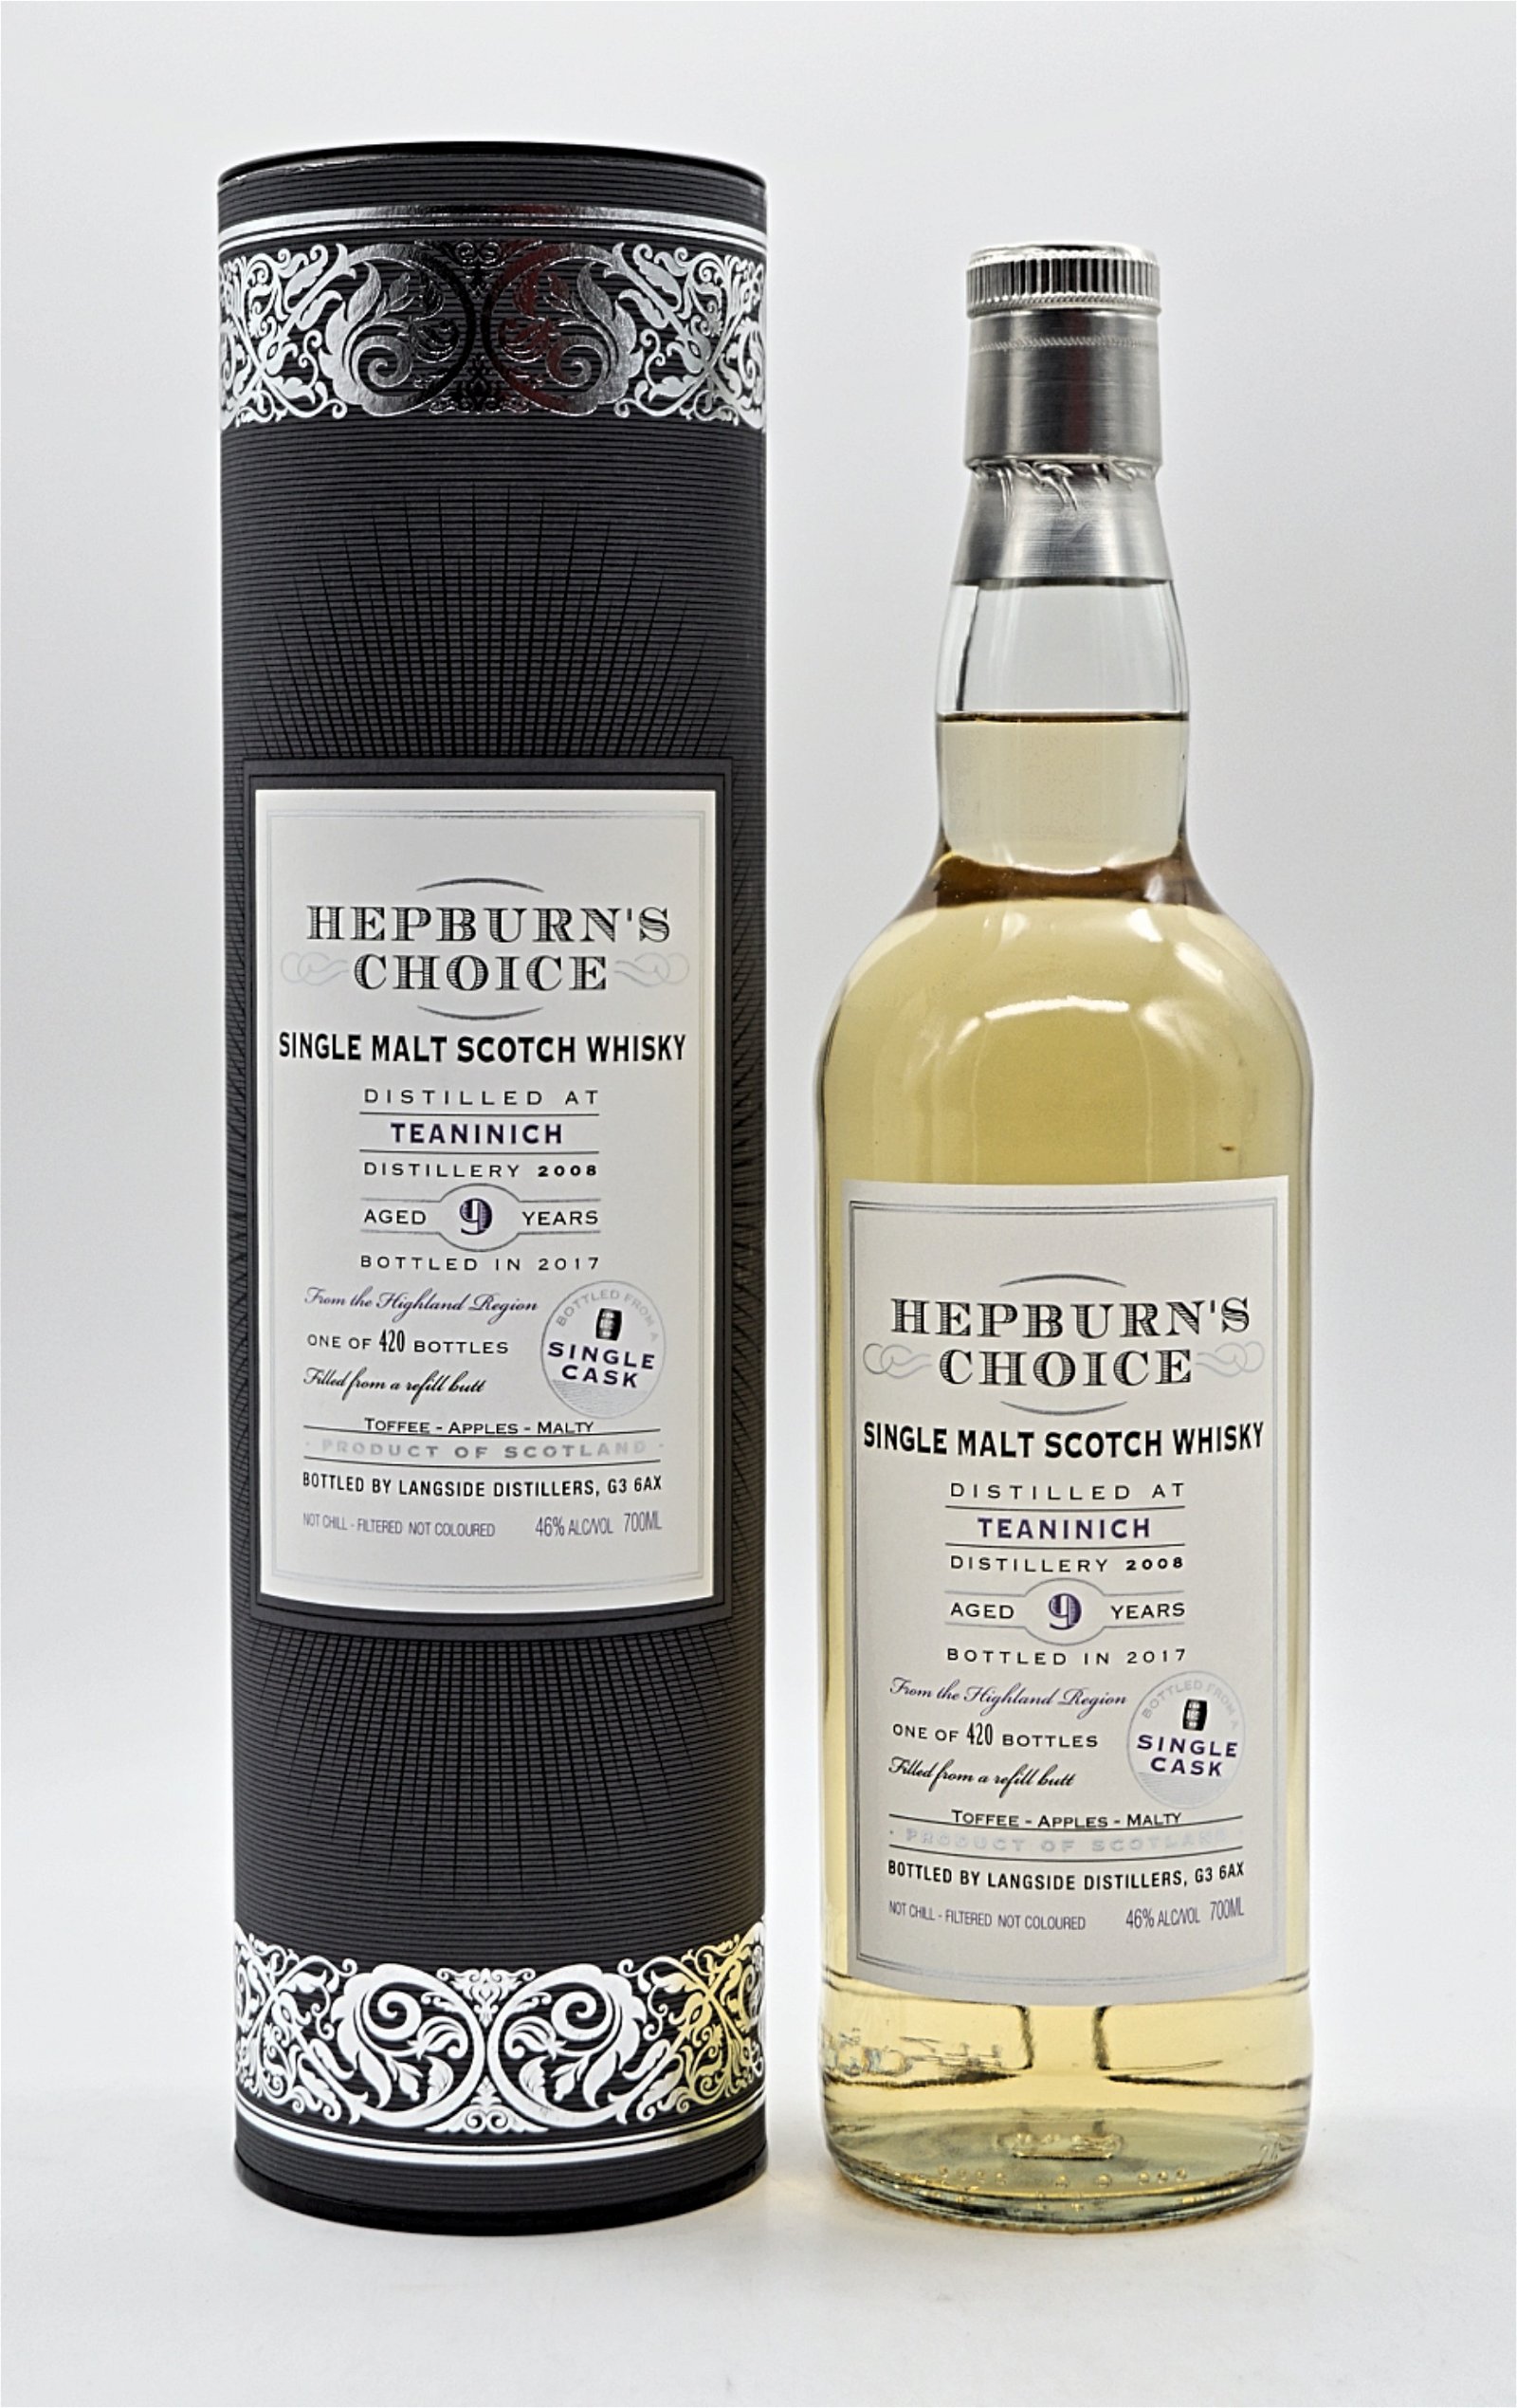 Hepburns Choice Teaninich 9 Jahre 2008/2017 - 420 Fl. Single Malt Scotch Whisky